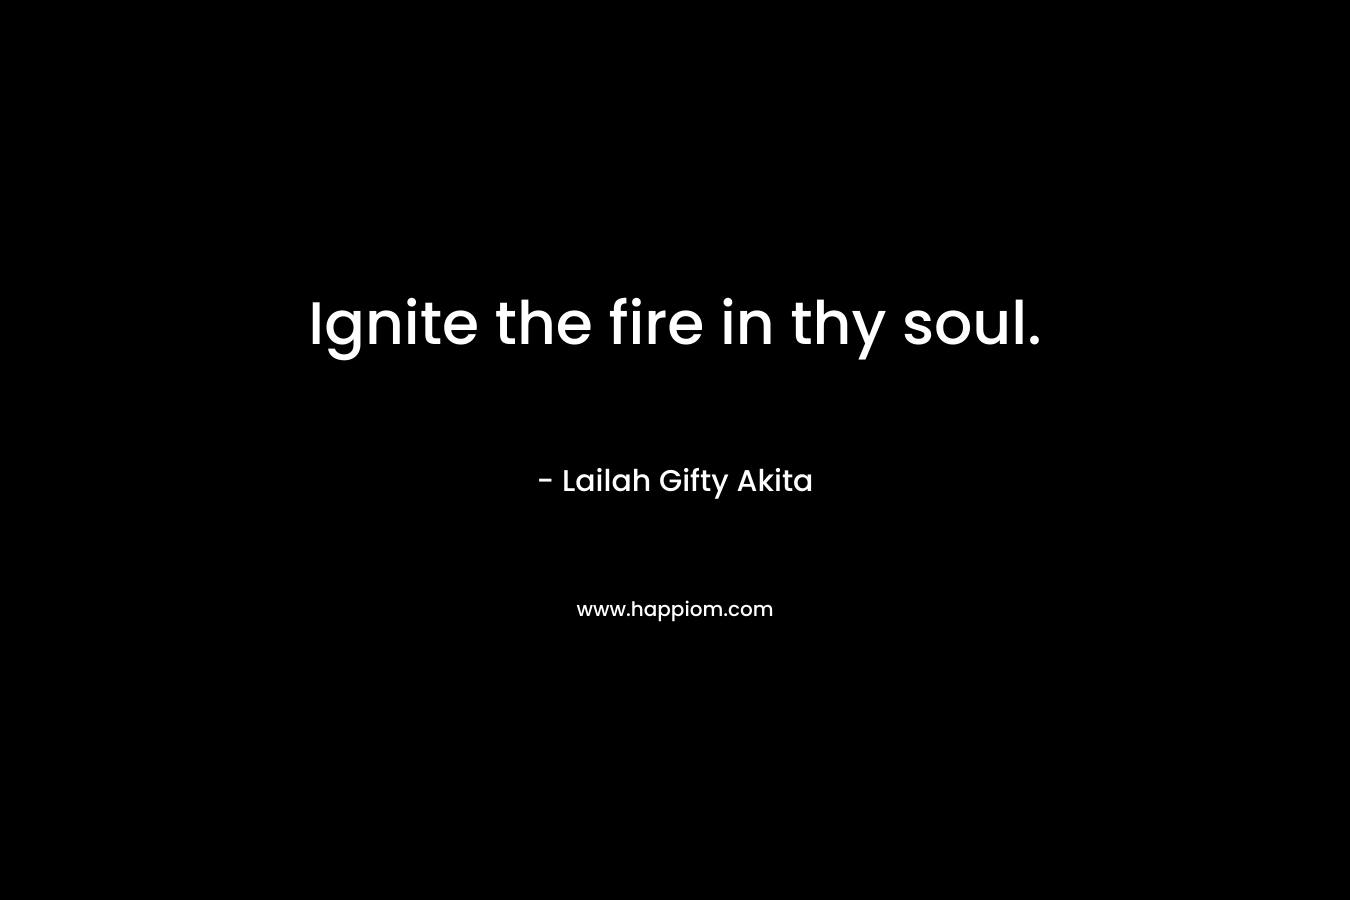 Ignite the fire in thy soul.